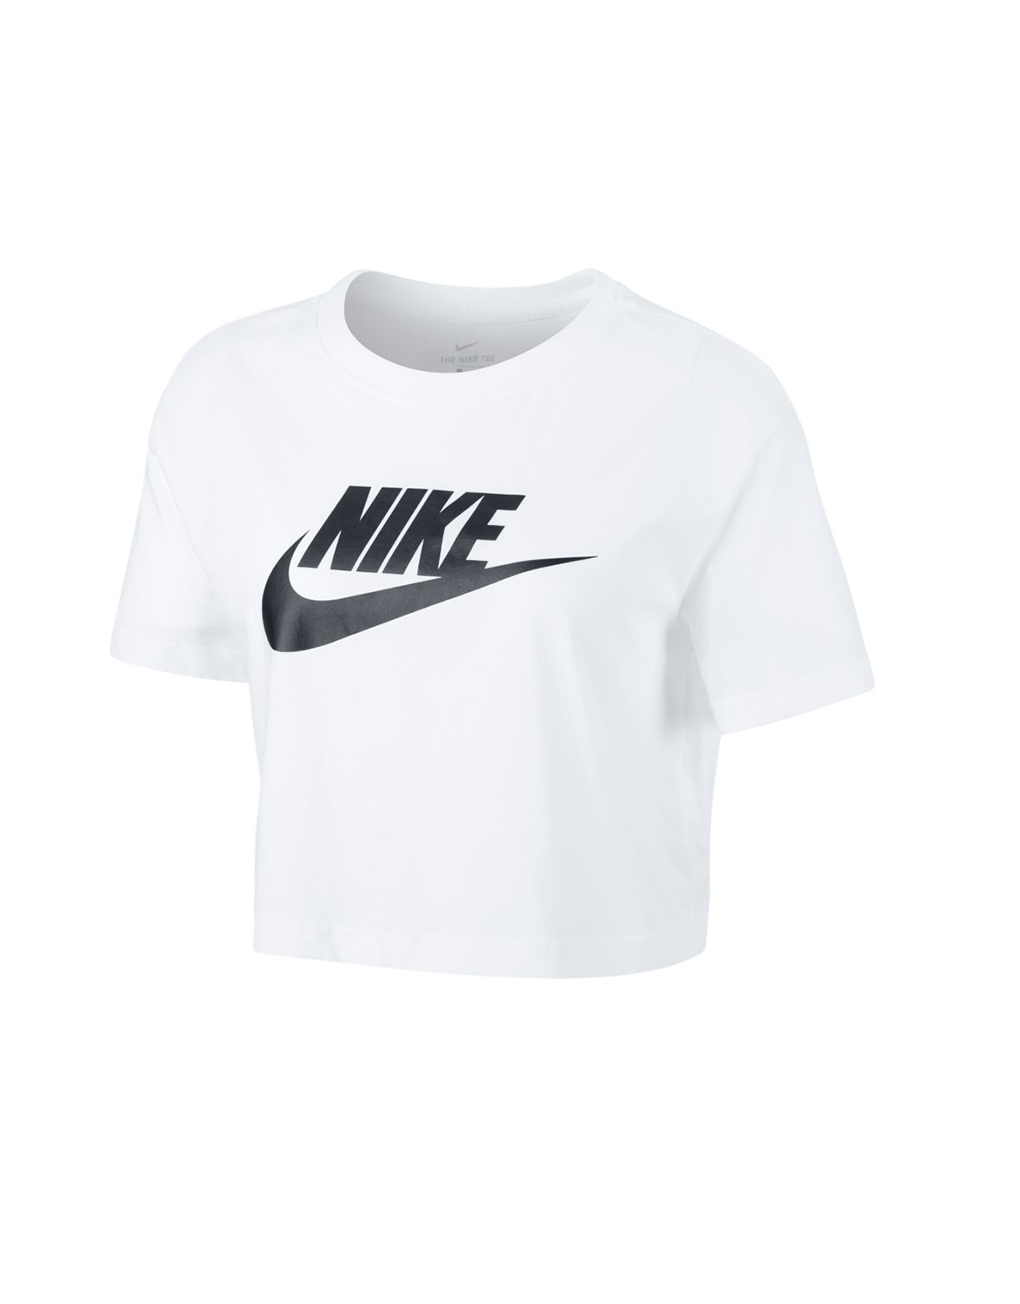 NIKE – Sportswear essential women’s cropped t-shirt white